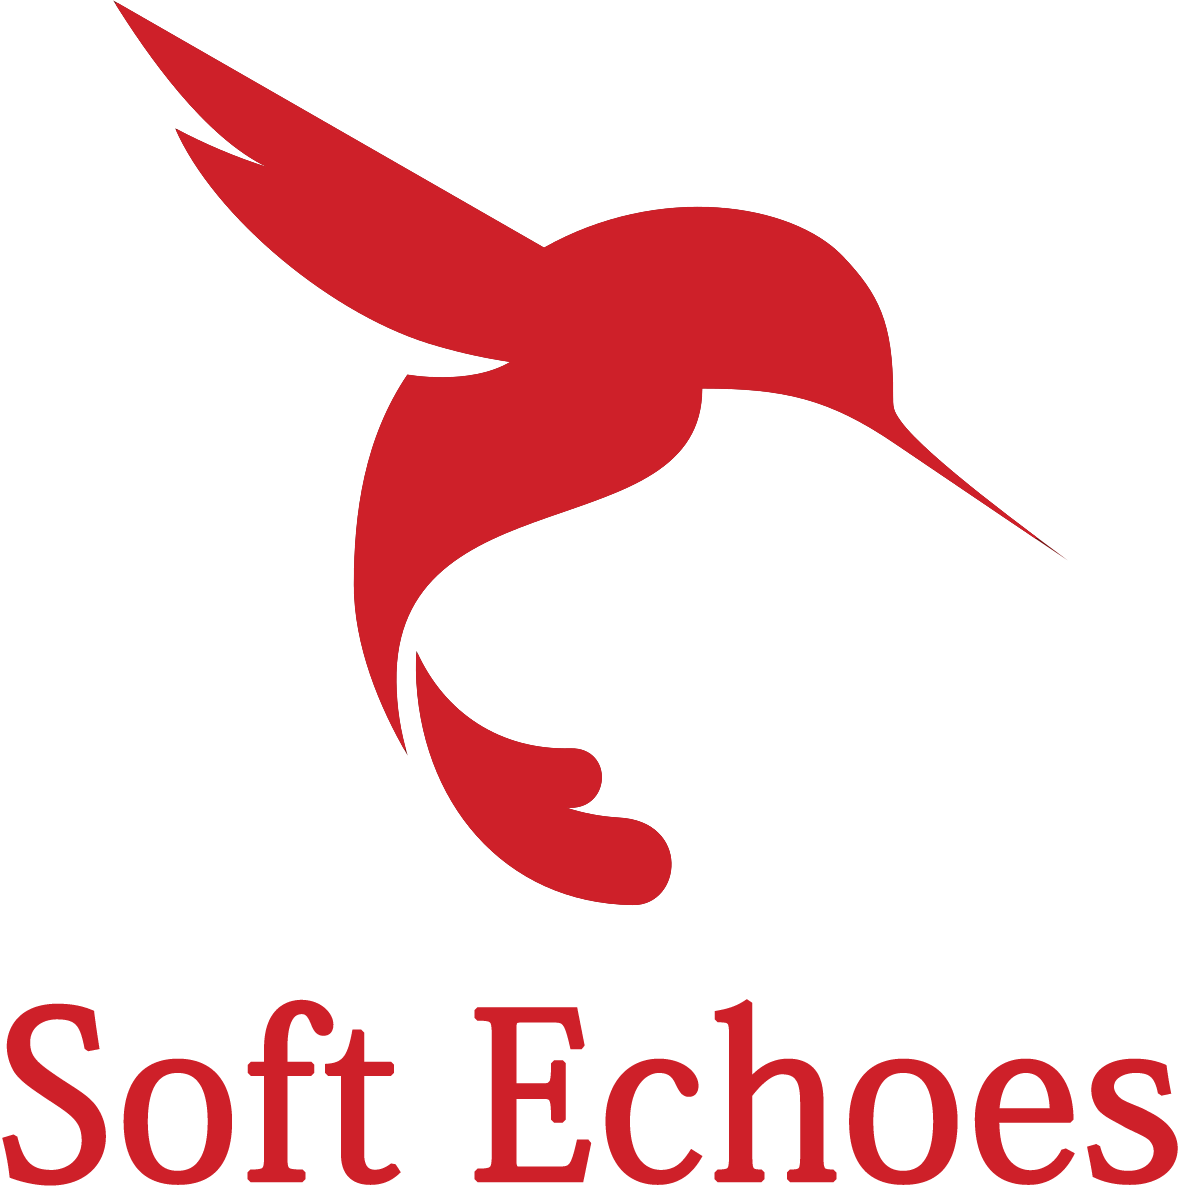 Soft Echoes Logo